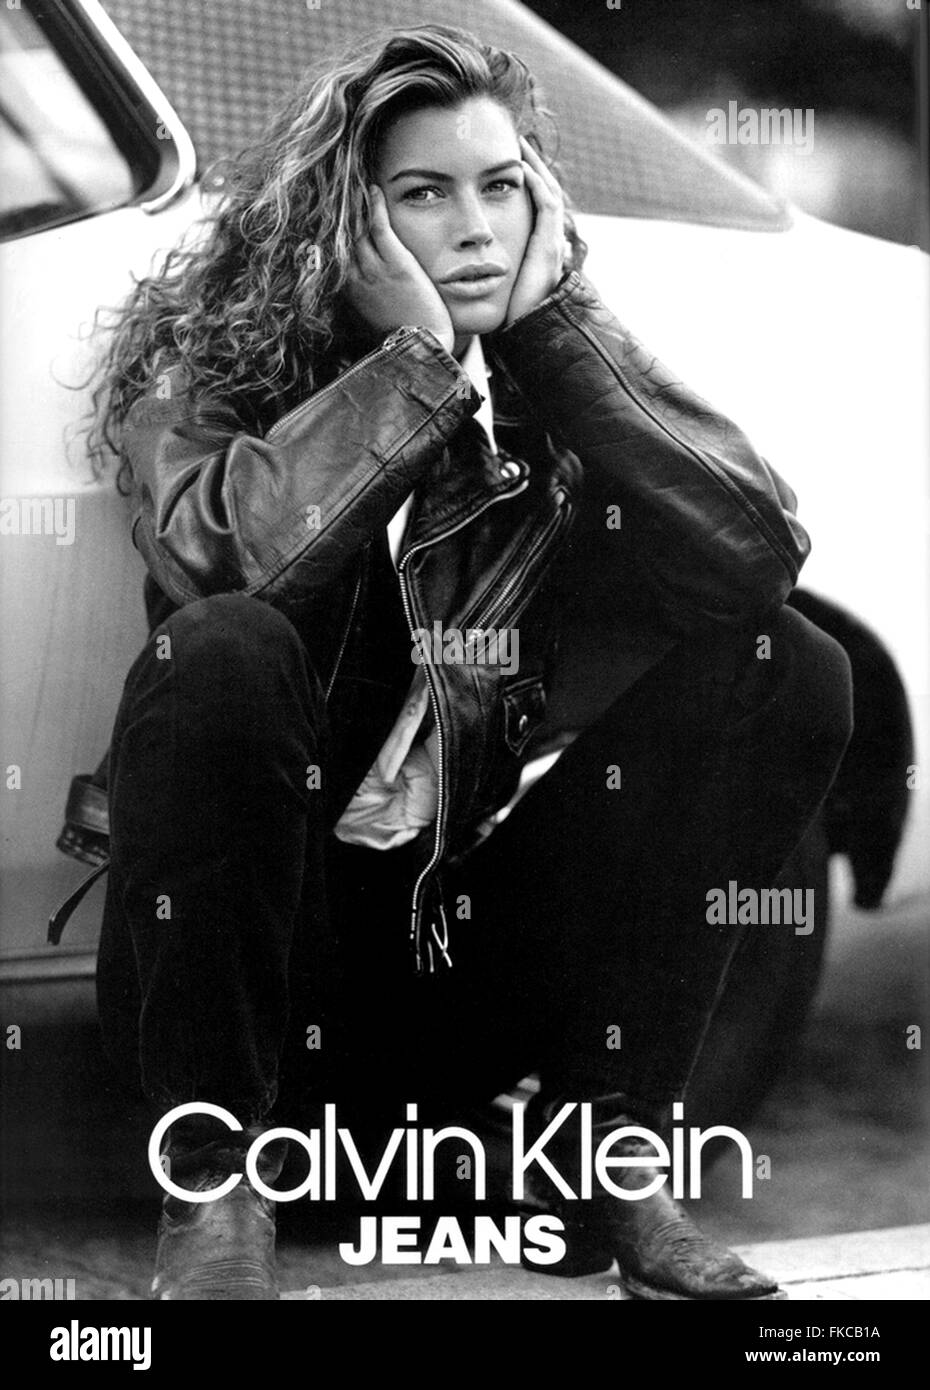 Hysterisk morsom Skrive ud veteran 1990s UK Calvin Klein Magazine Advert Stock Photo - Alamy